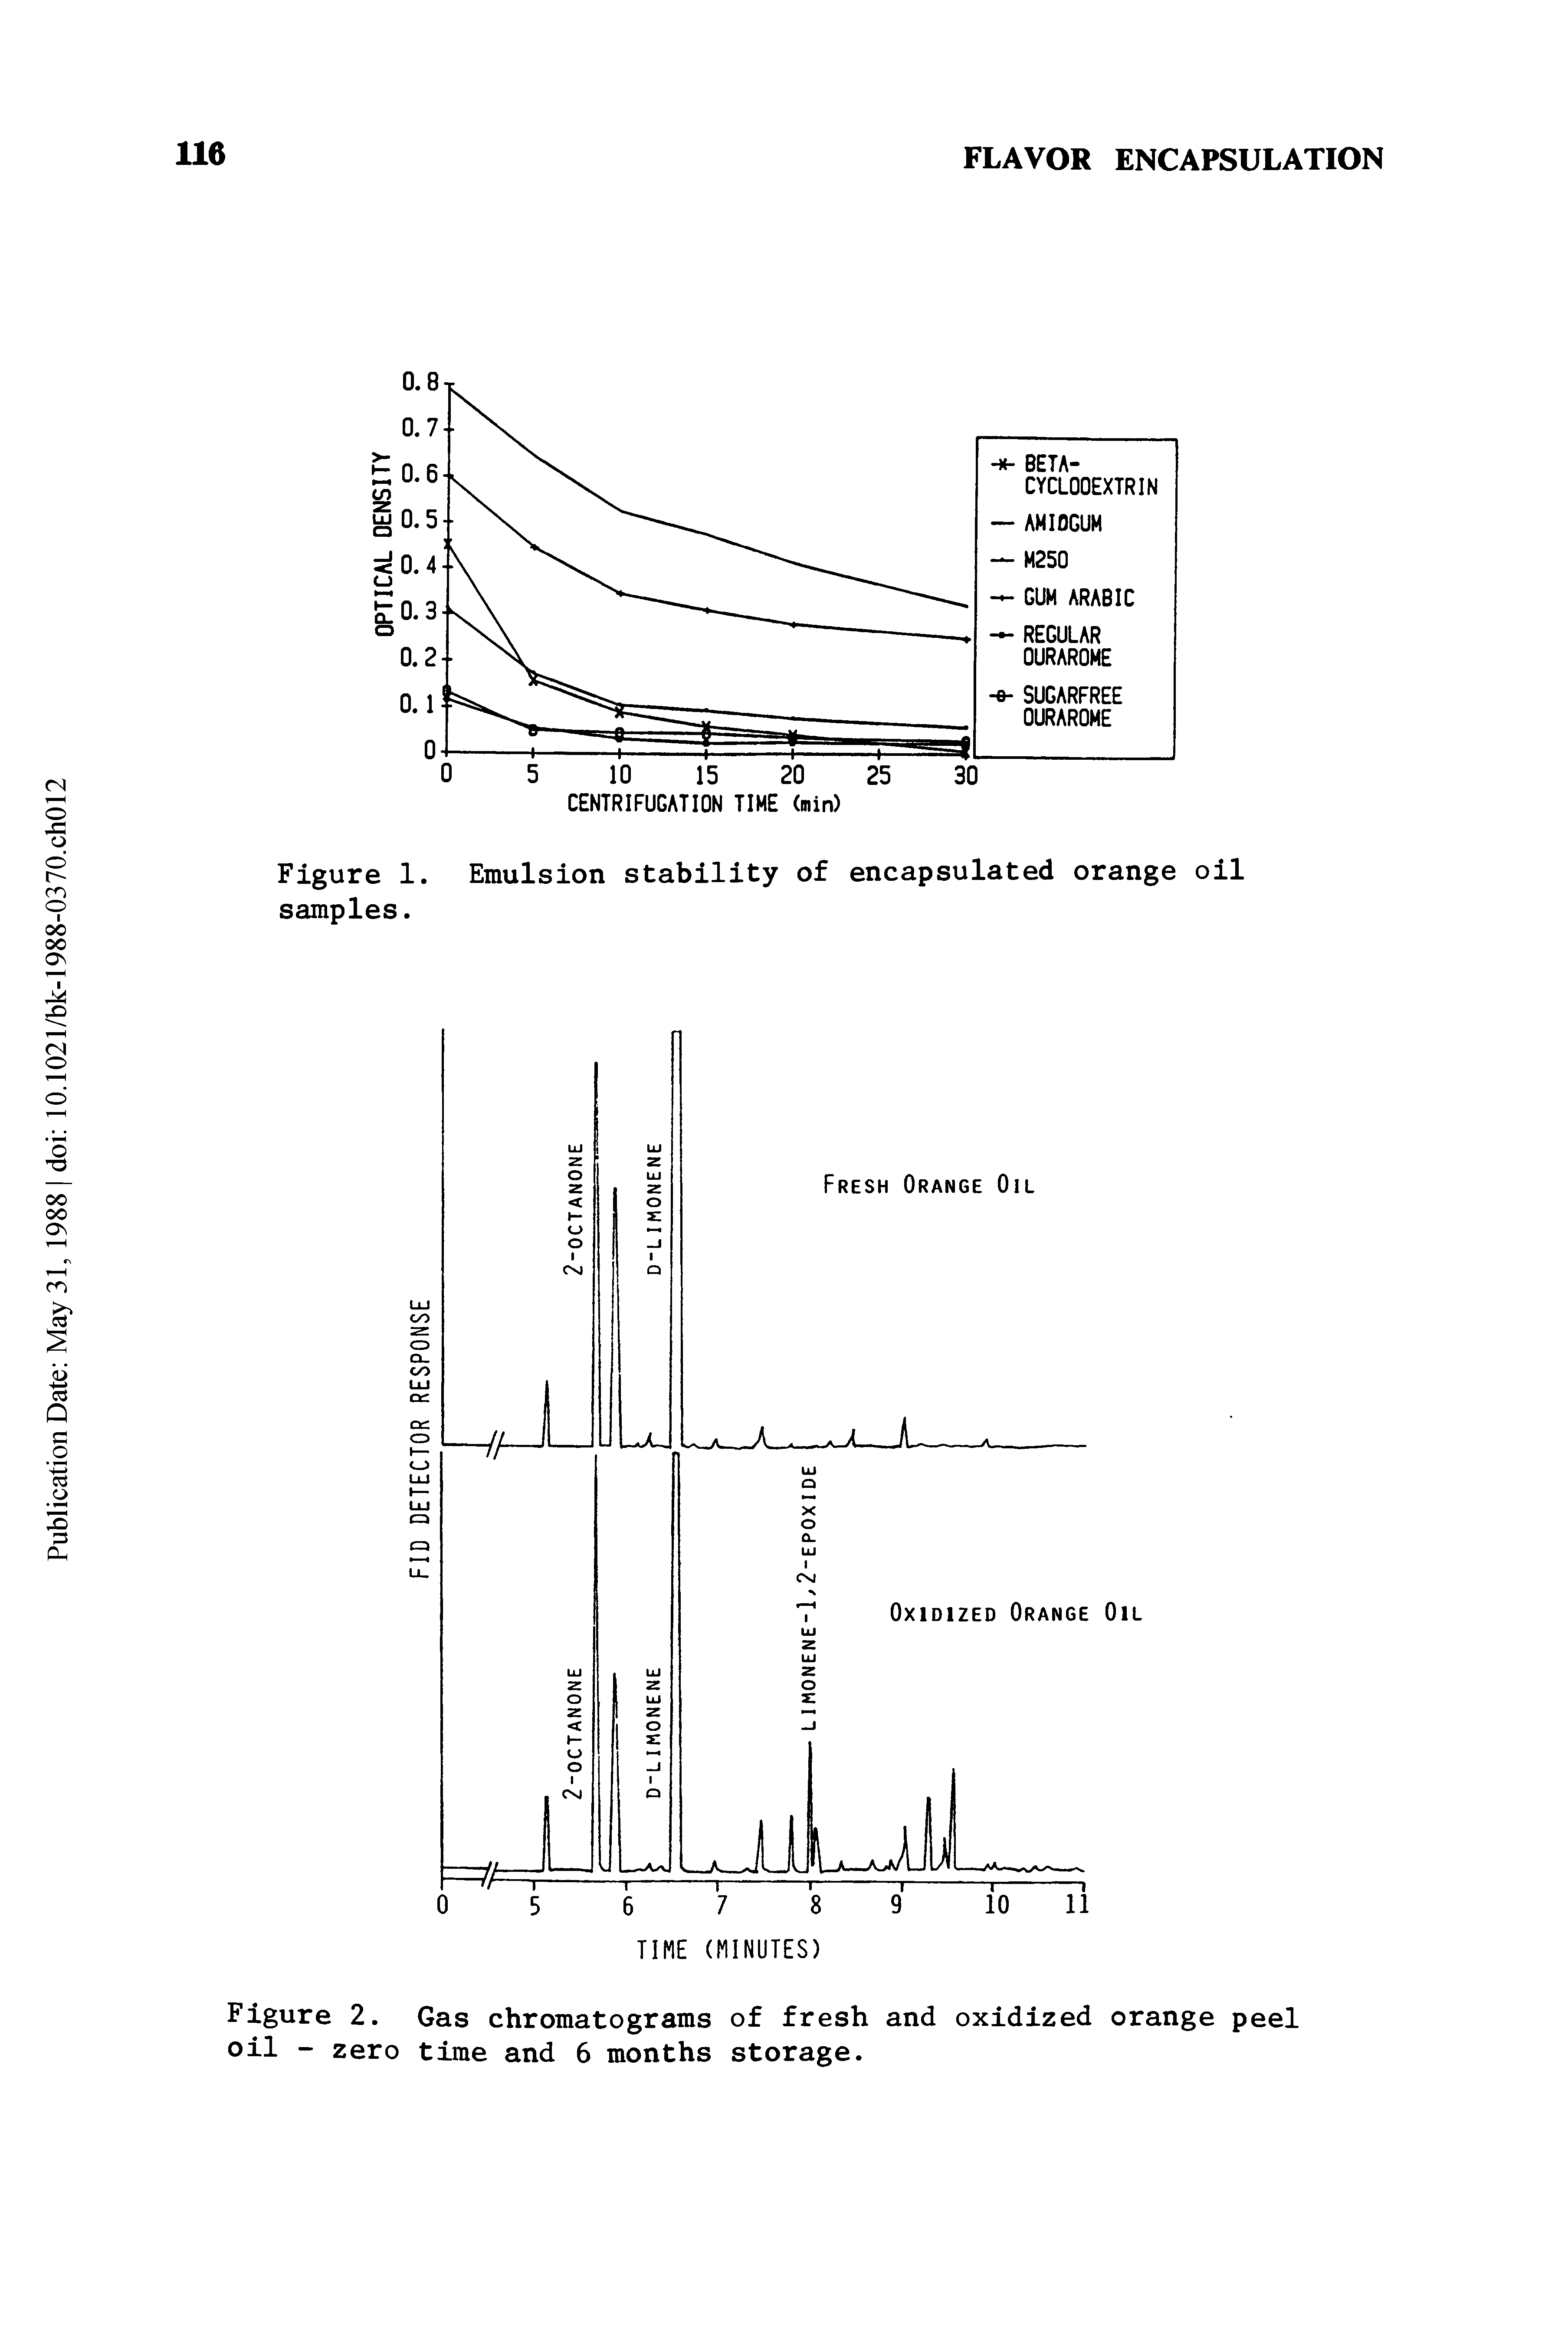 Figure 1. Emulsion stability of encapsulated orange oil samples.